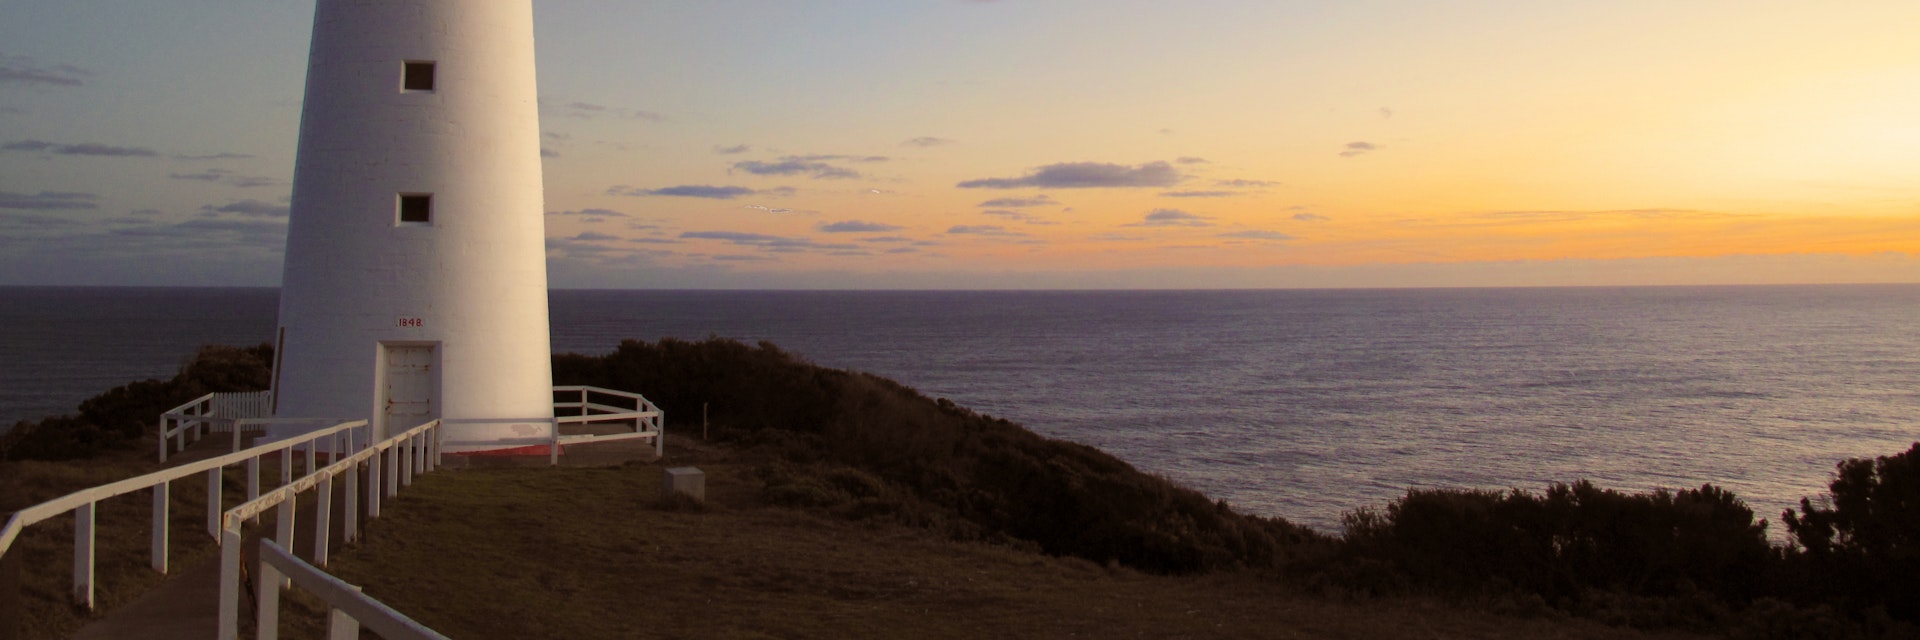 Cape Otway Lighthouse - Winter Sunset